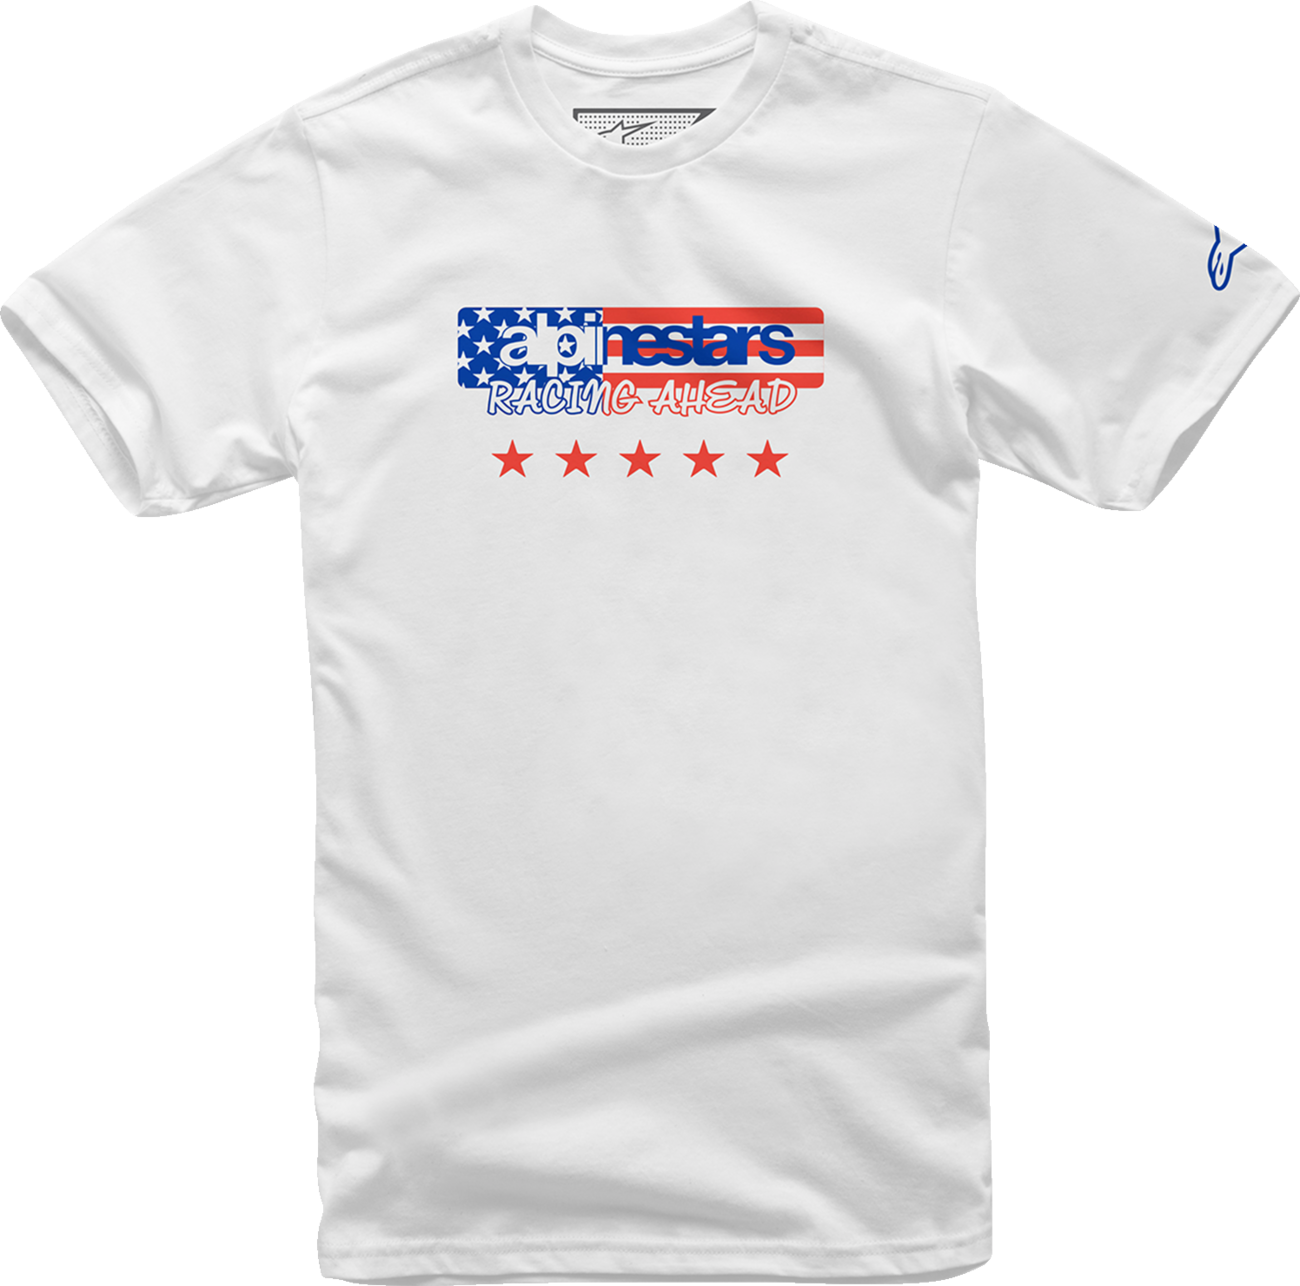 Camiseta ALPINESTARS USA Again - Blanco - Grande 12137261020L